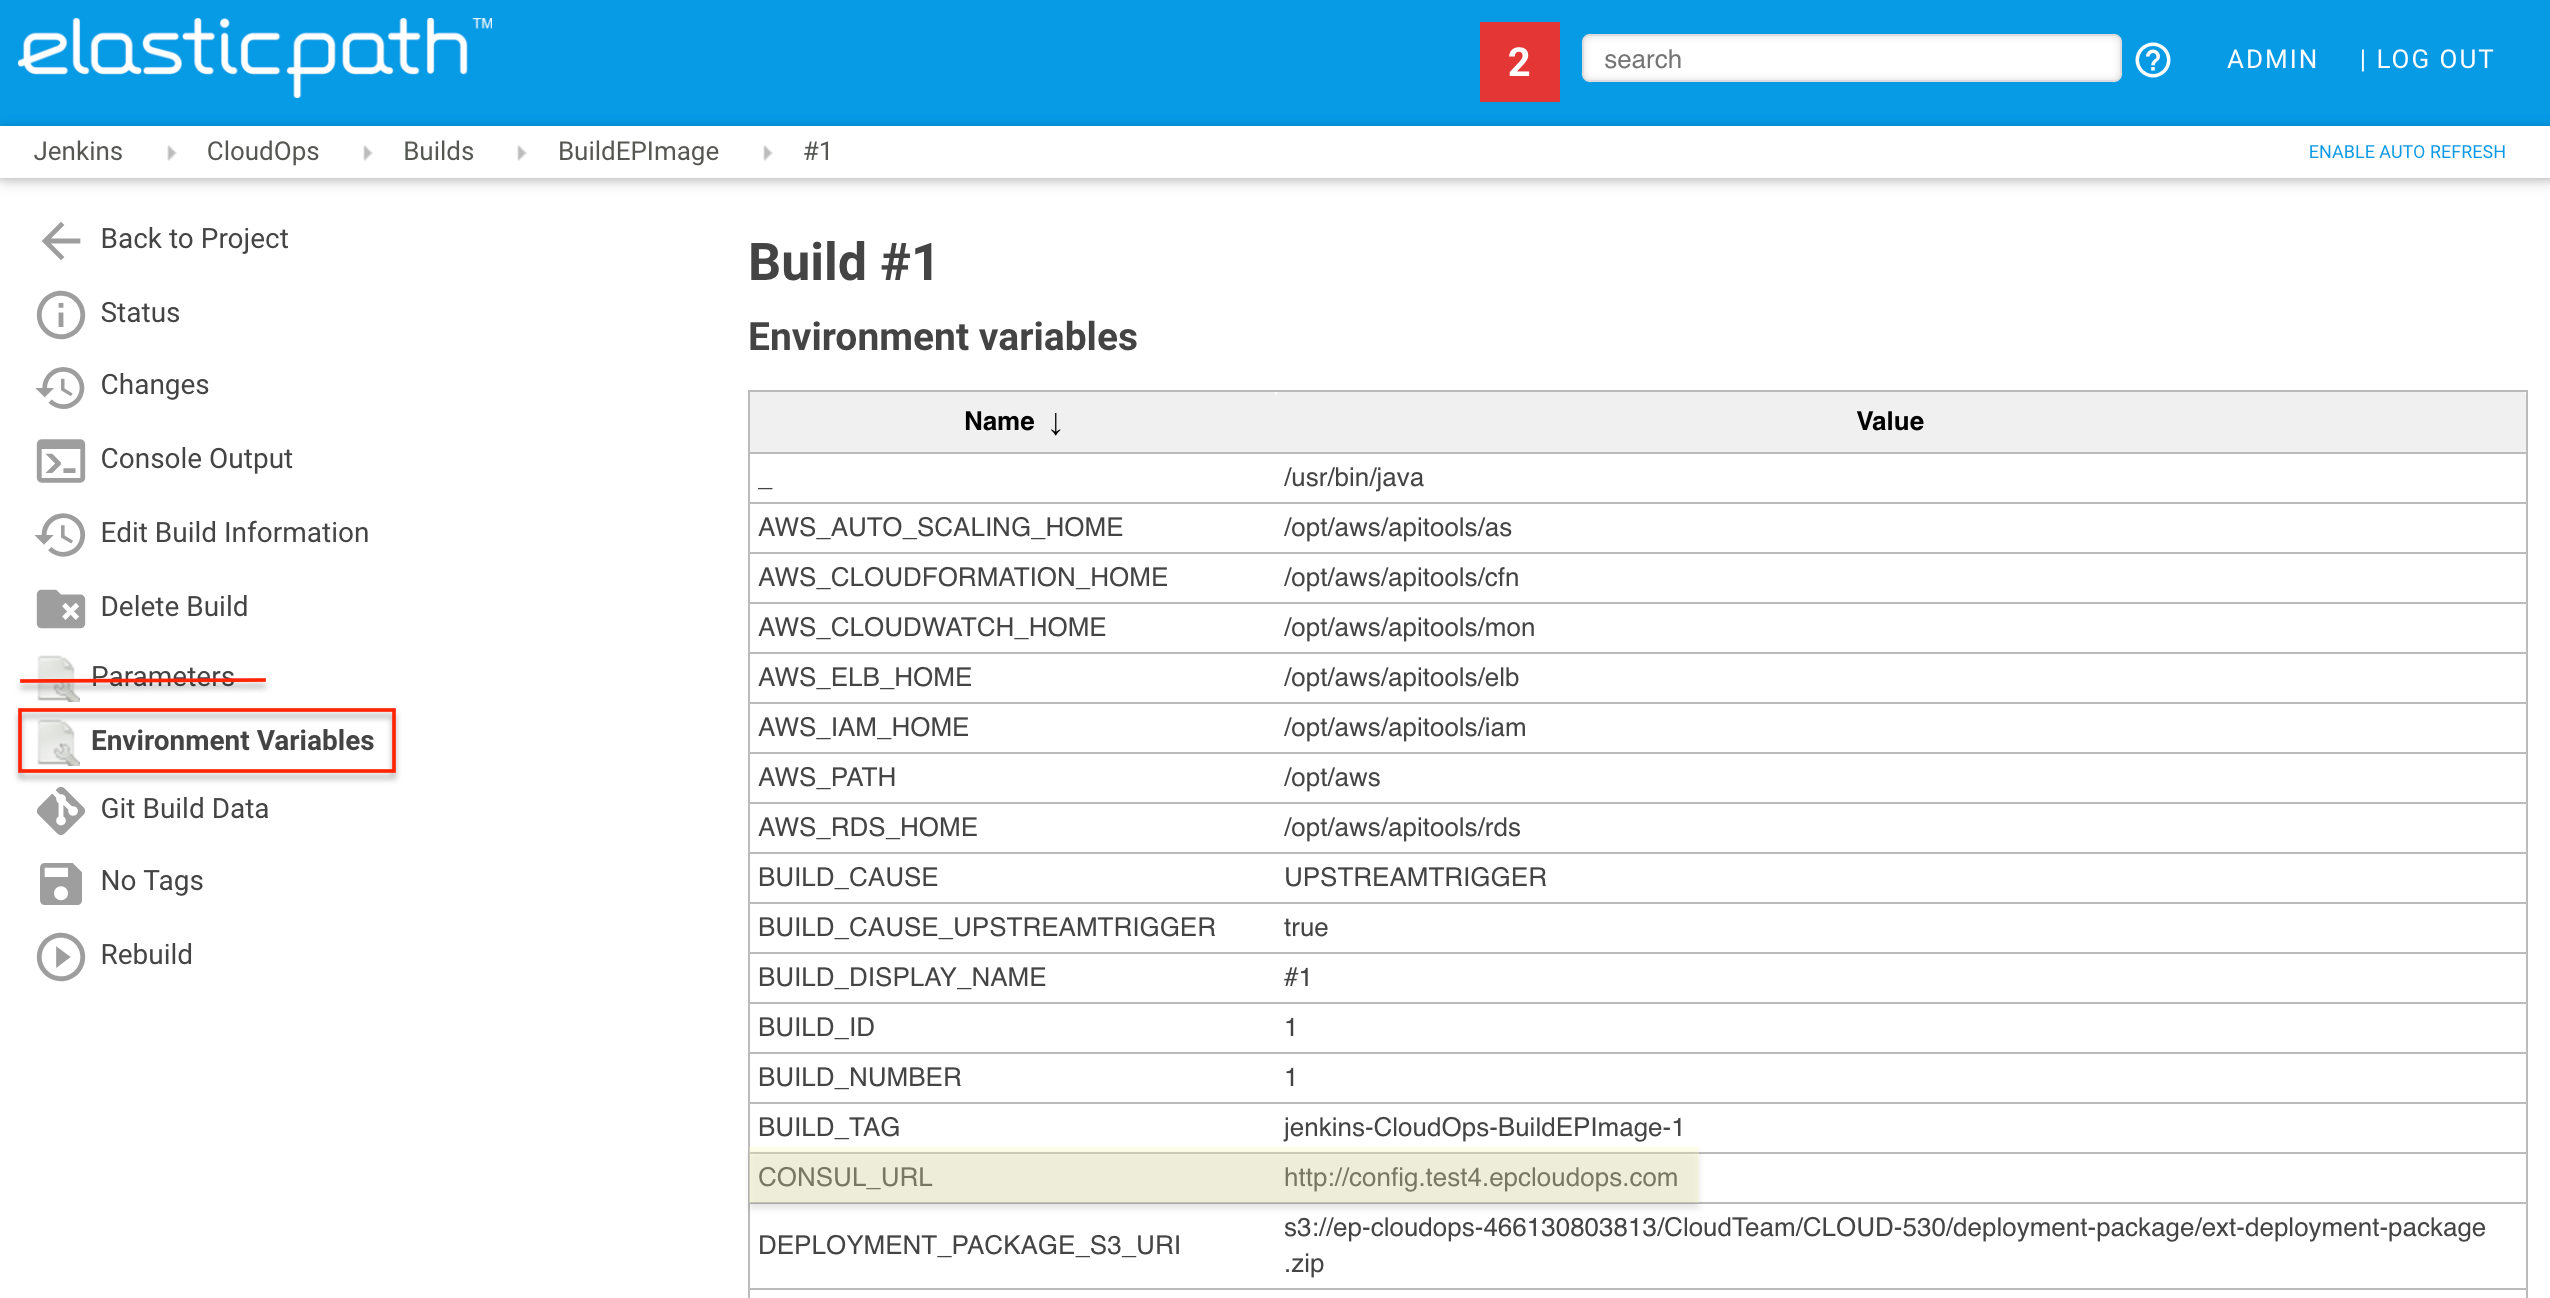 BuildEPImage job build #1, Environment Variables tab view.